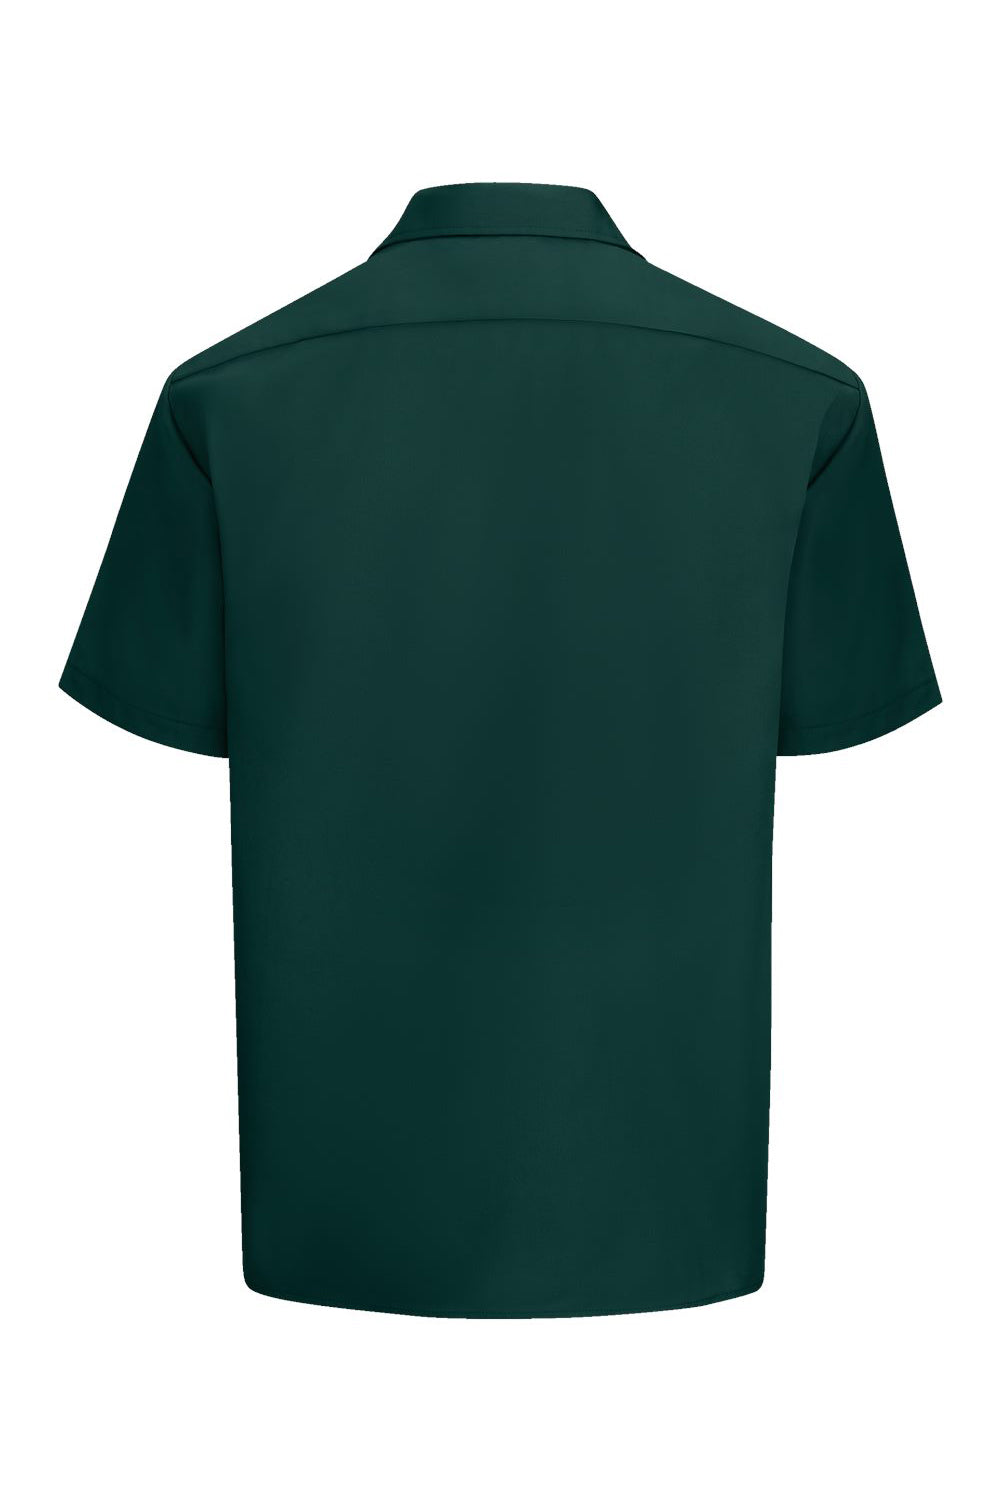 Dickies 2574 Mens Moisture Wicking Short Sleeve Button Down Work Shirt w/ Double Pockets Hunter Green Flat Back